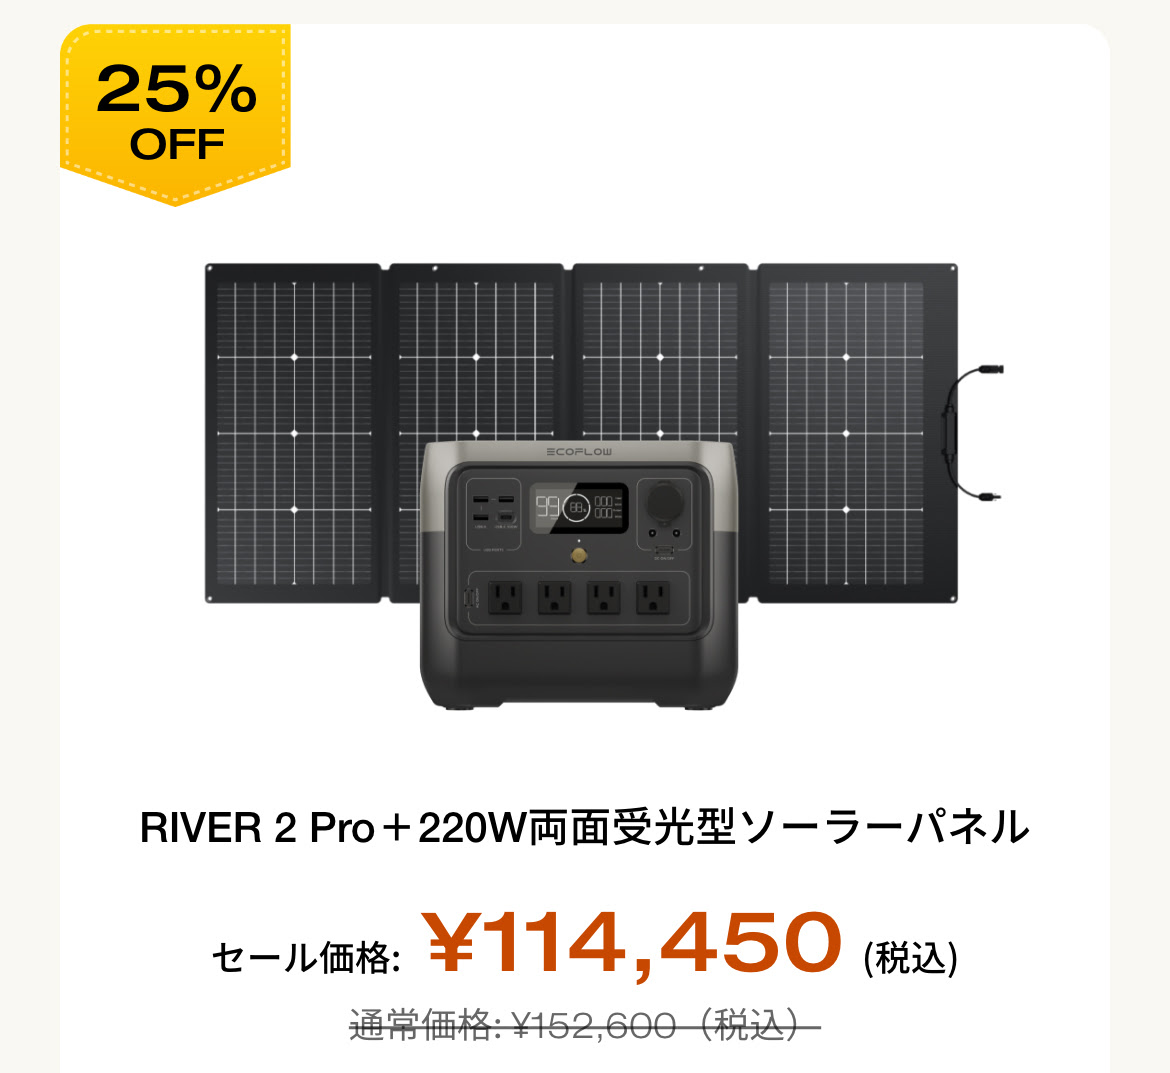 RIVER 2 Pro＋220W両面受光型ソーラーパネル 25%OFF 通常価格 152,600 セール価格 114,450